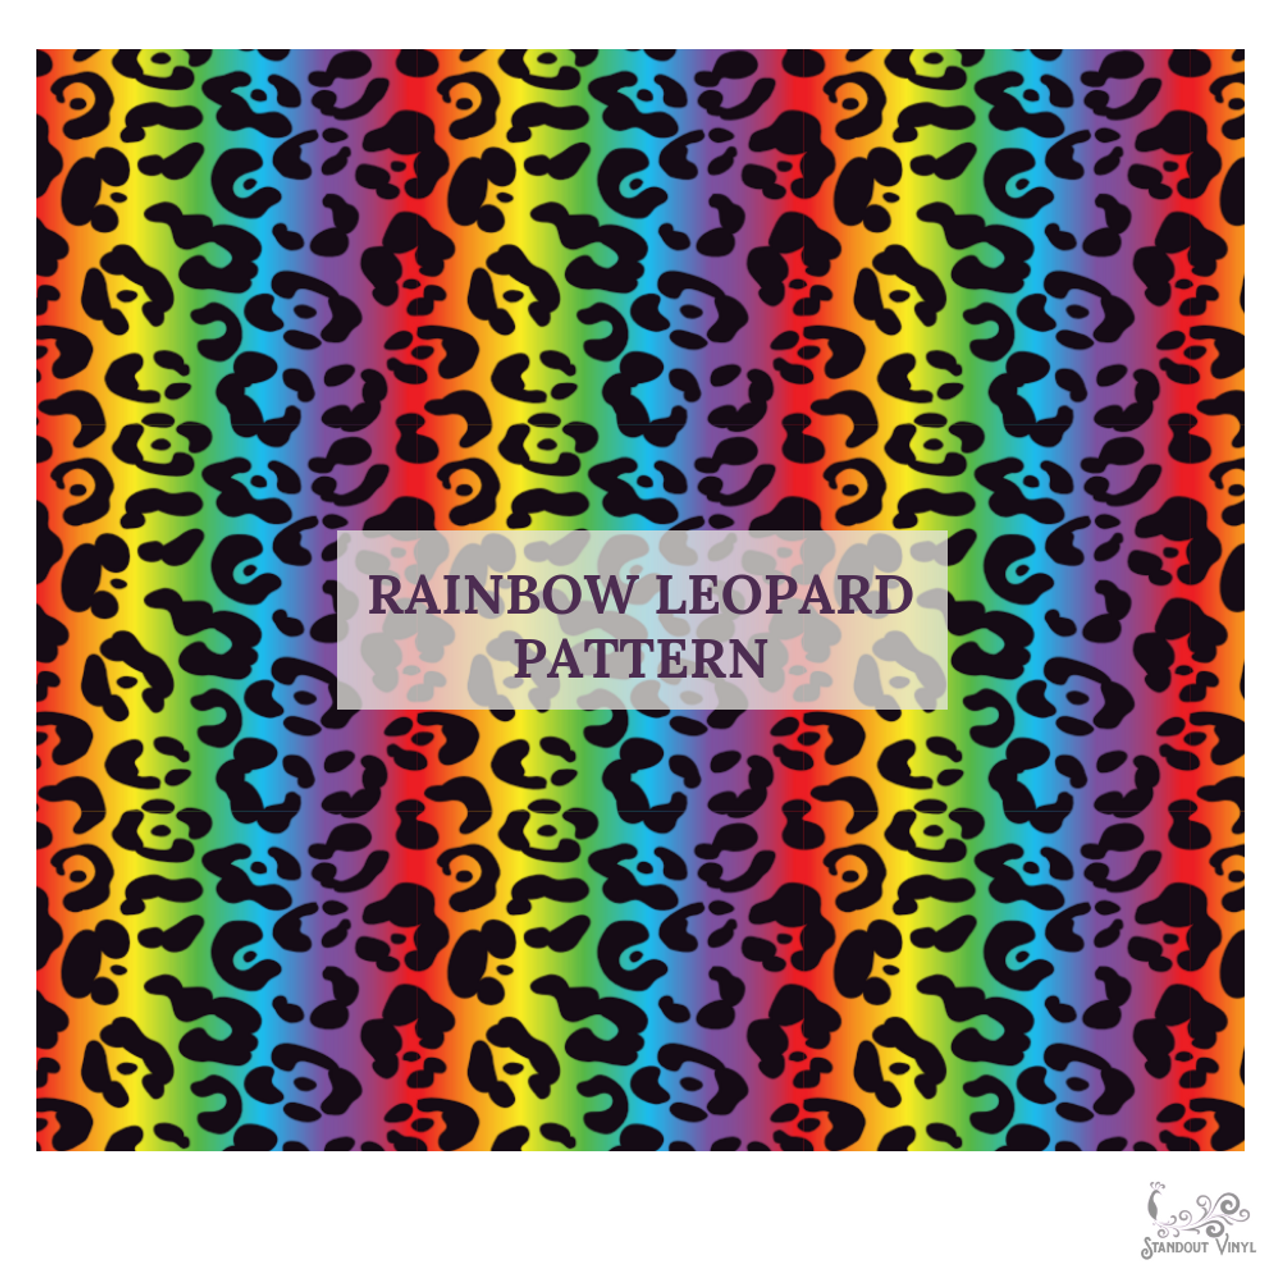 Rainbow Leopard Pattern - Choose Adhesive or HTV